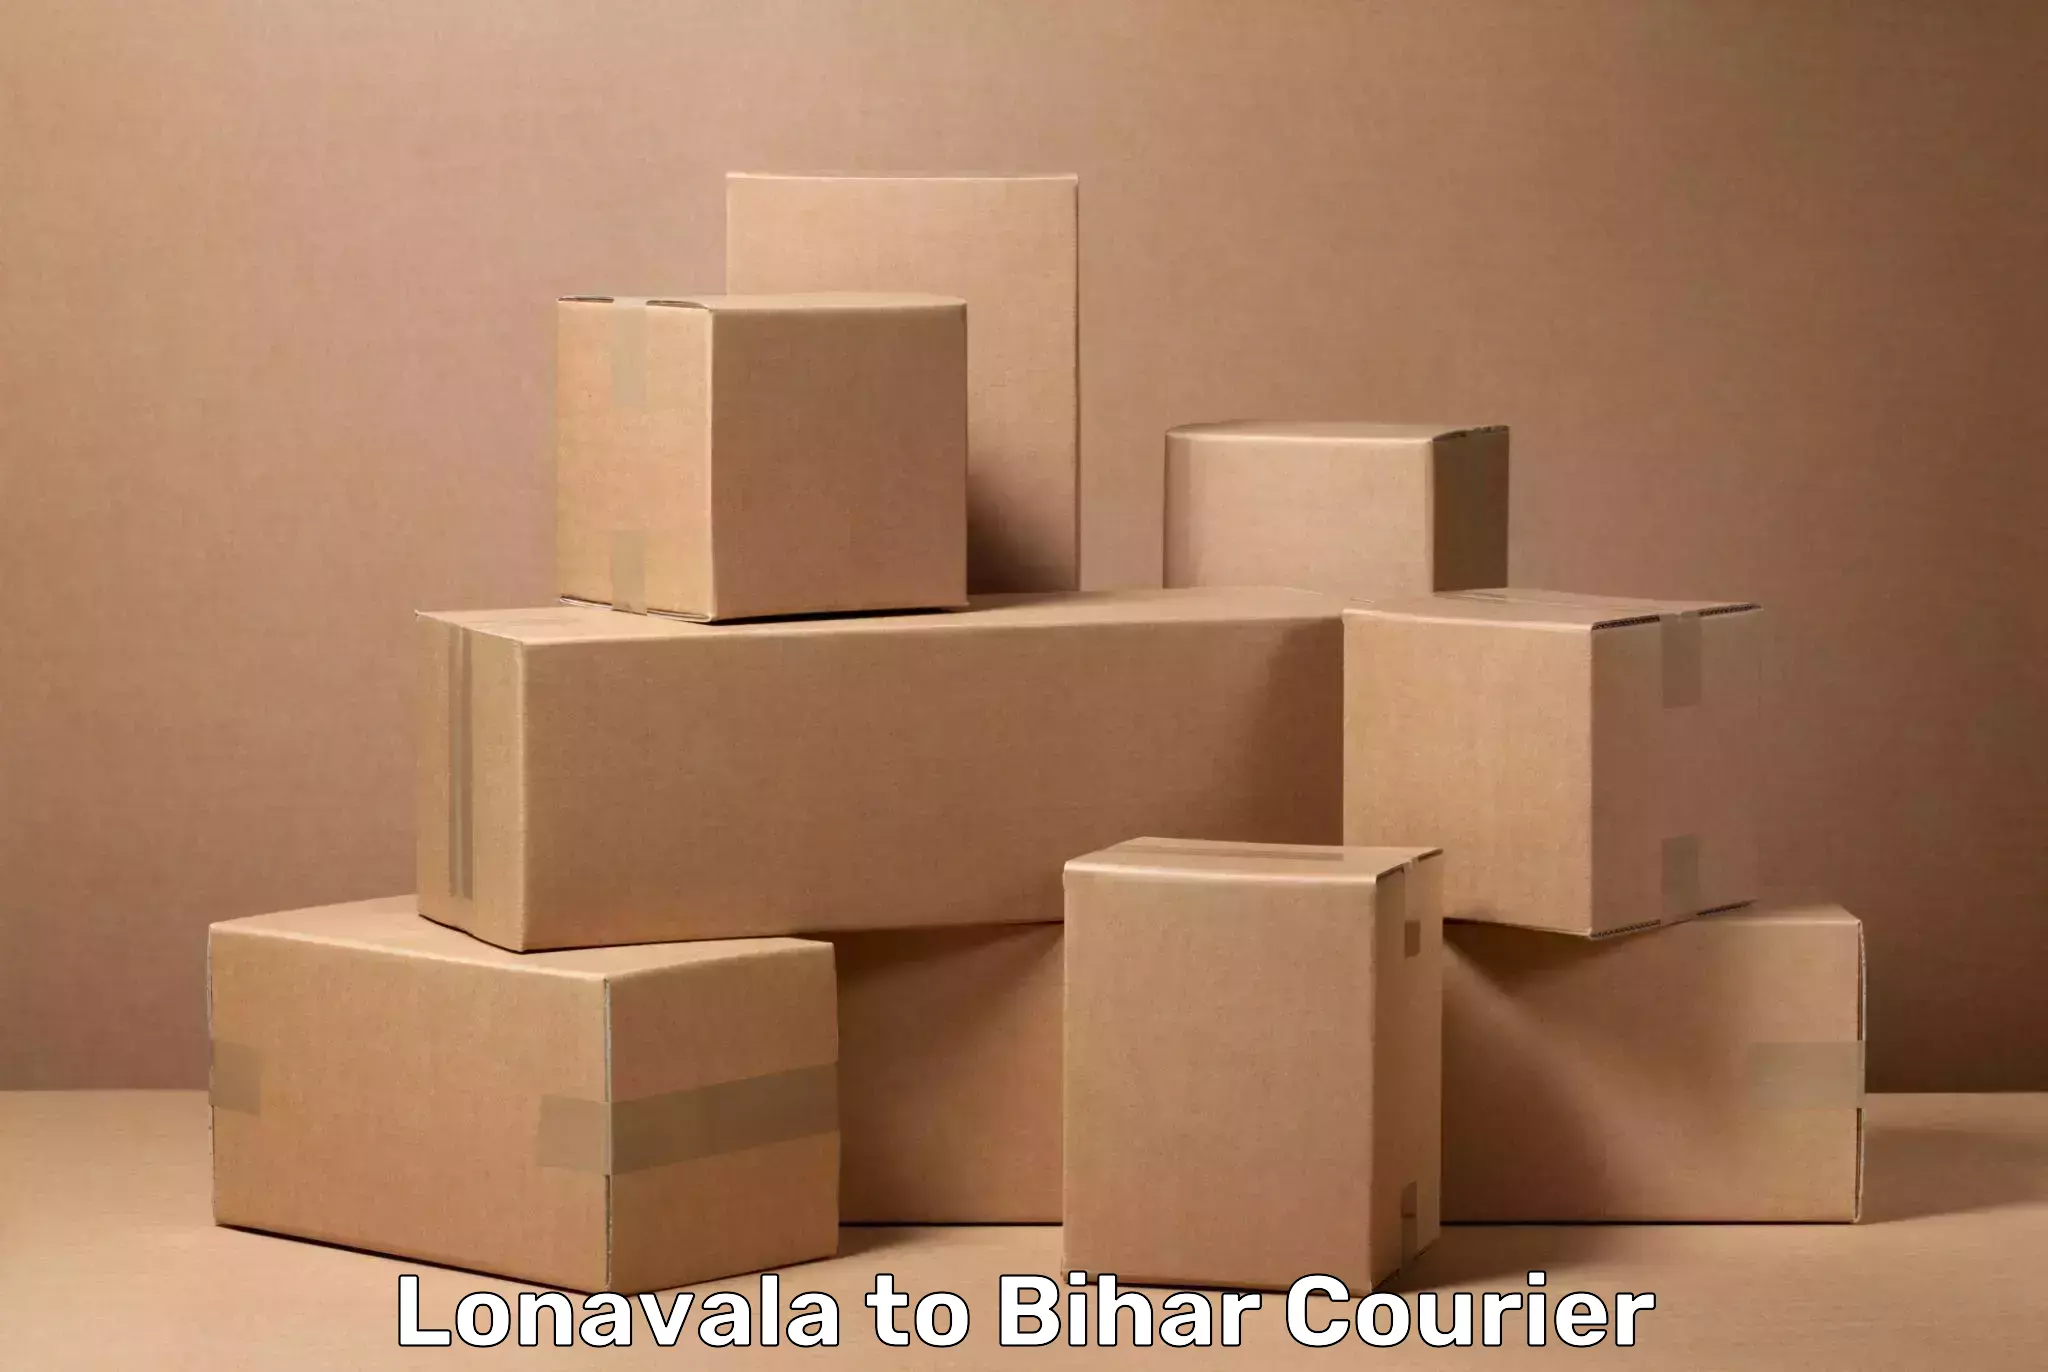 Luggage delivery app Lonavala to Bihar